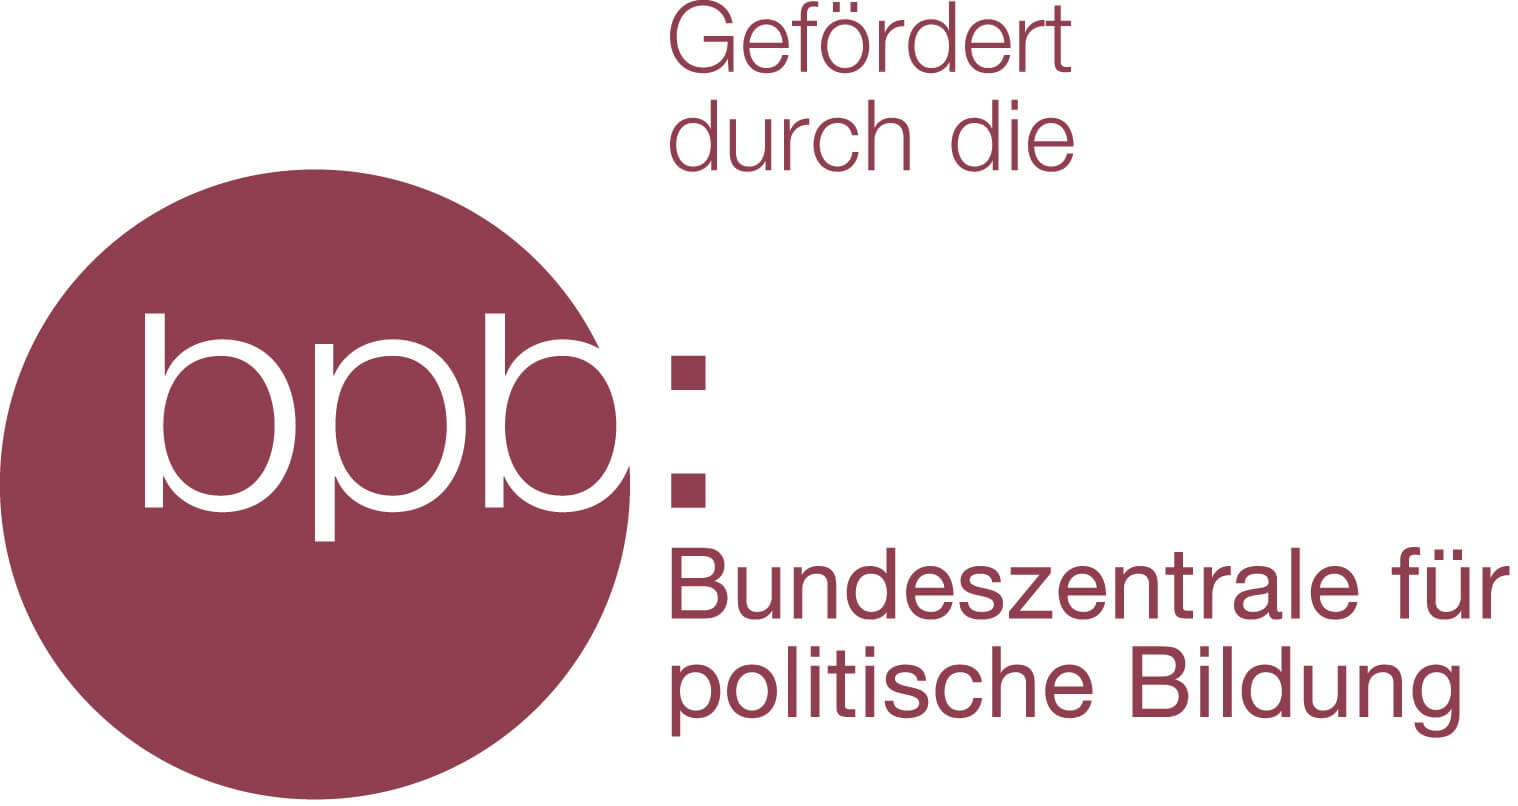 BPB Logo